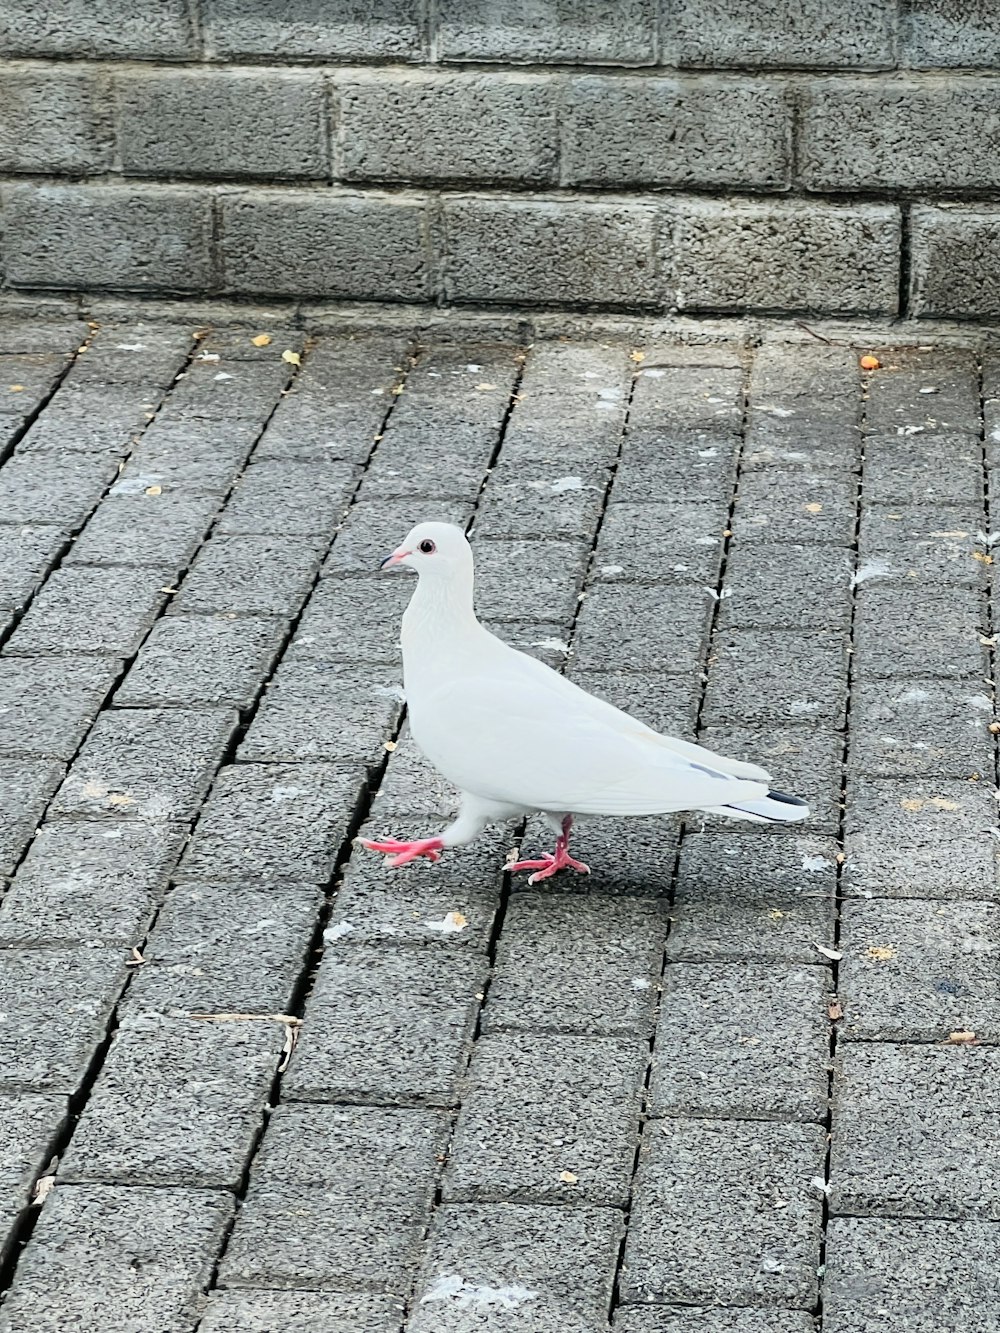 a white bird on a brick surface